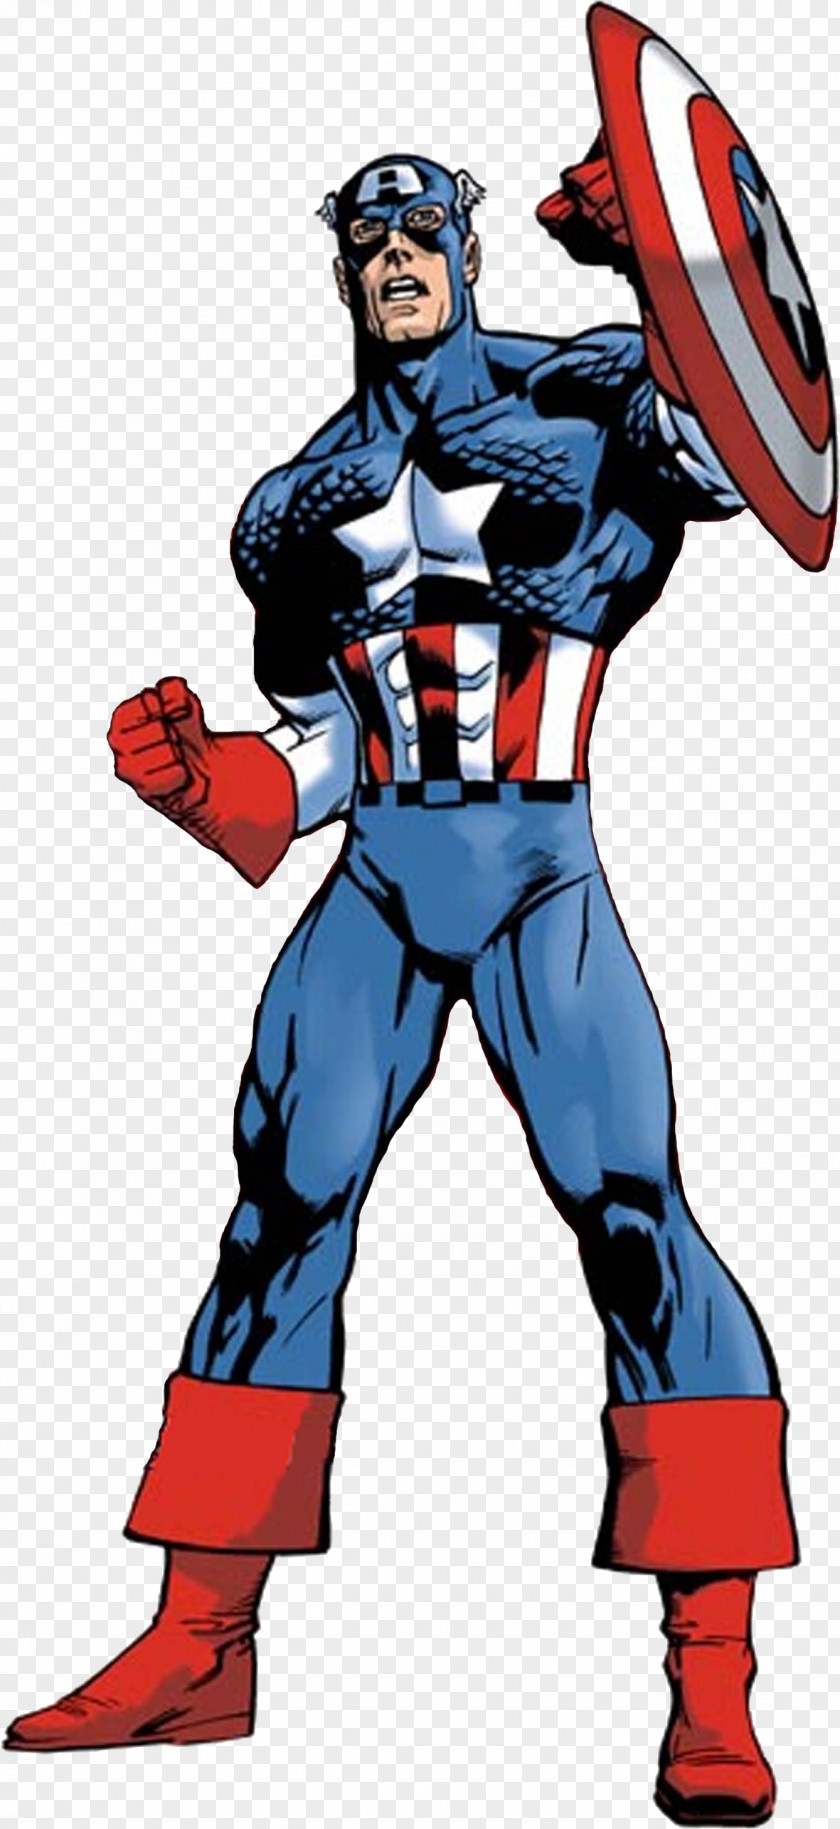 Captain America Marvel Comics The Avengers PNG